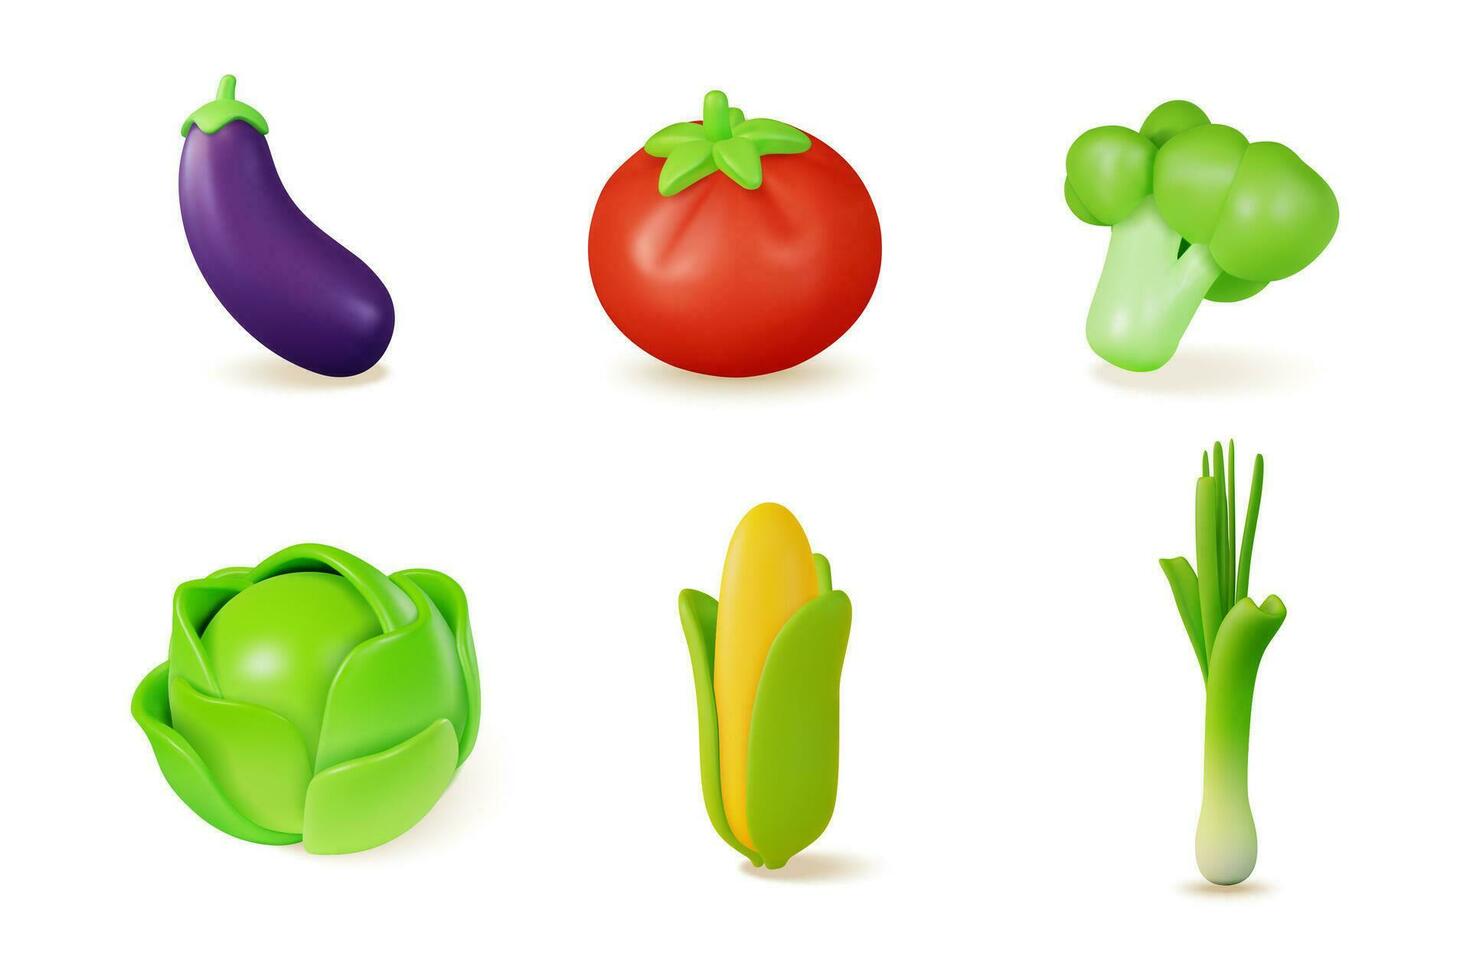 3d Color Different Vegetables Set Cartoon Style. Vector